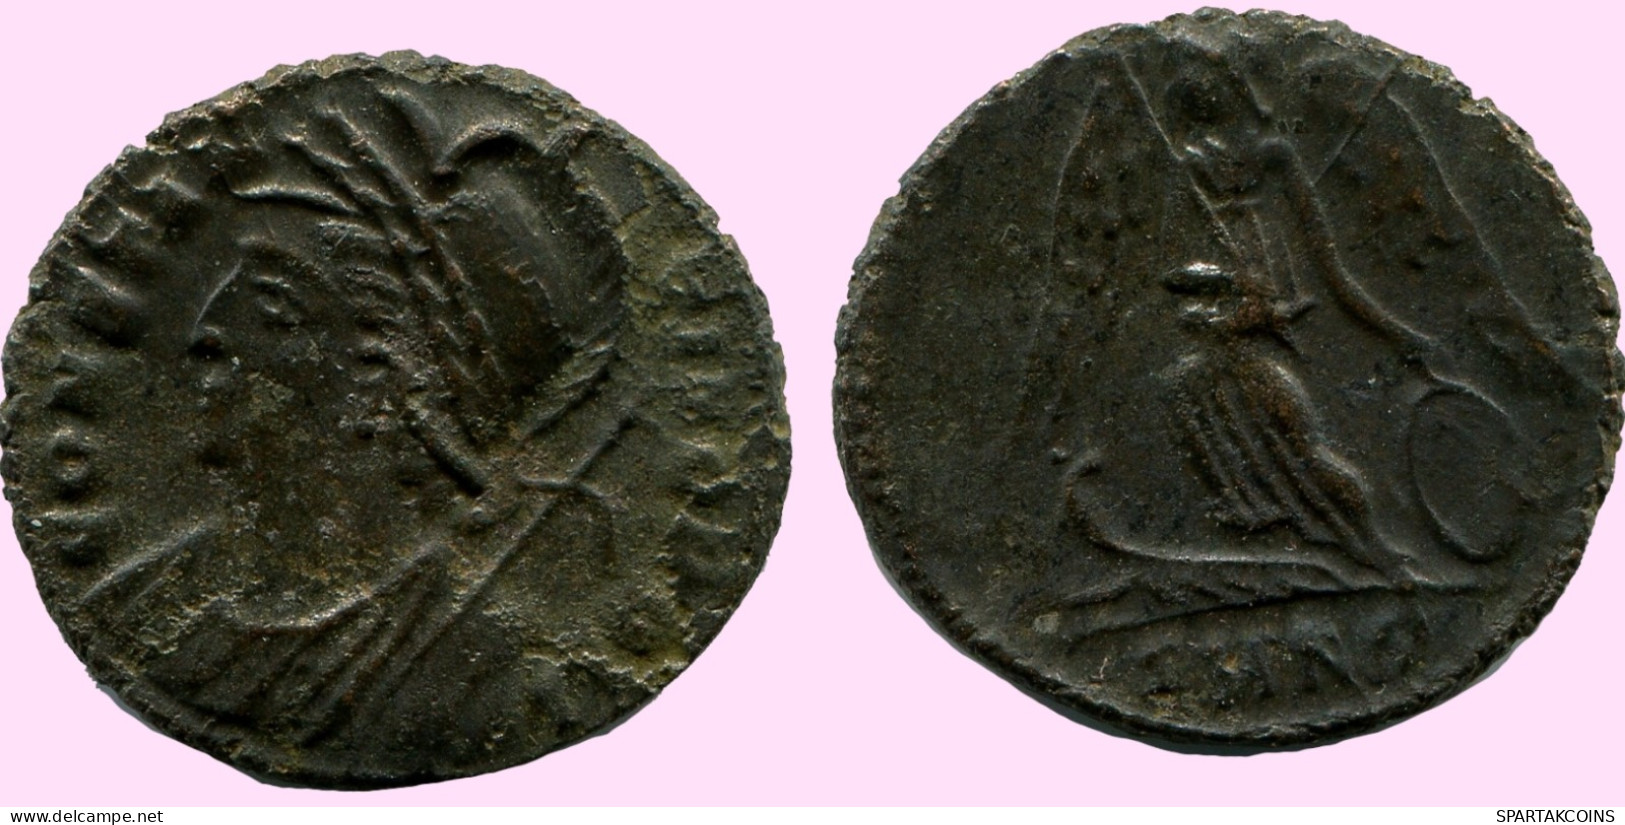 CONSTANTINUS I CONSTANTINOPOLI FOLLIS Ancient ROMAN Coin #ANC12083.25.U.A - El Imperio Christiano (307 / 363)